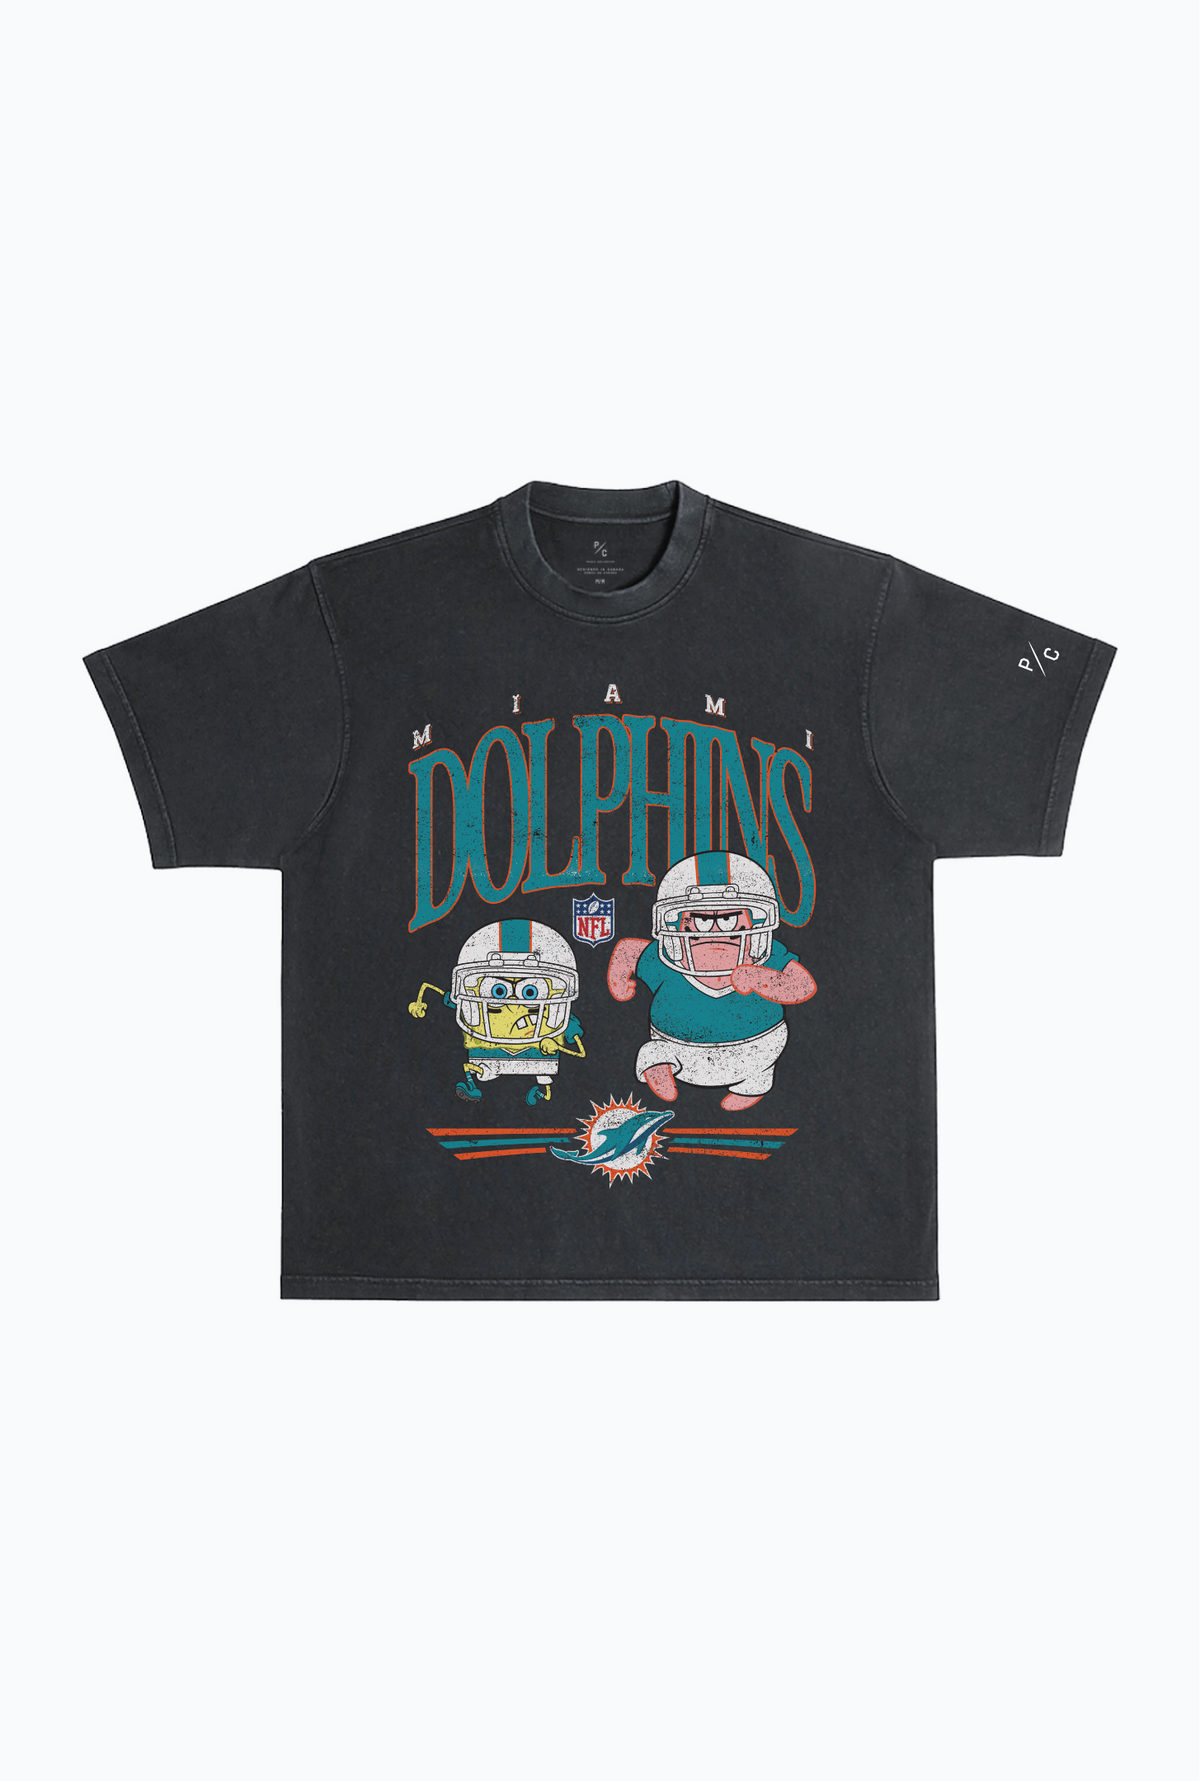 Spongebob & Patrick Rush Heavy Pigment Dye T-Shirt - Miami Dolphins